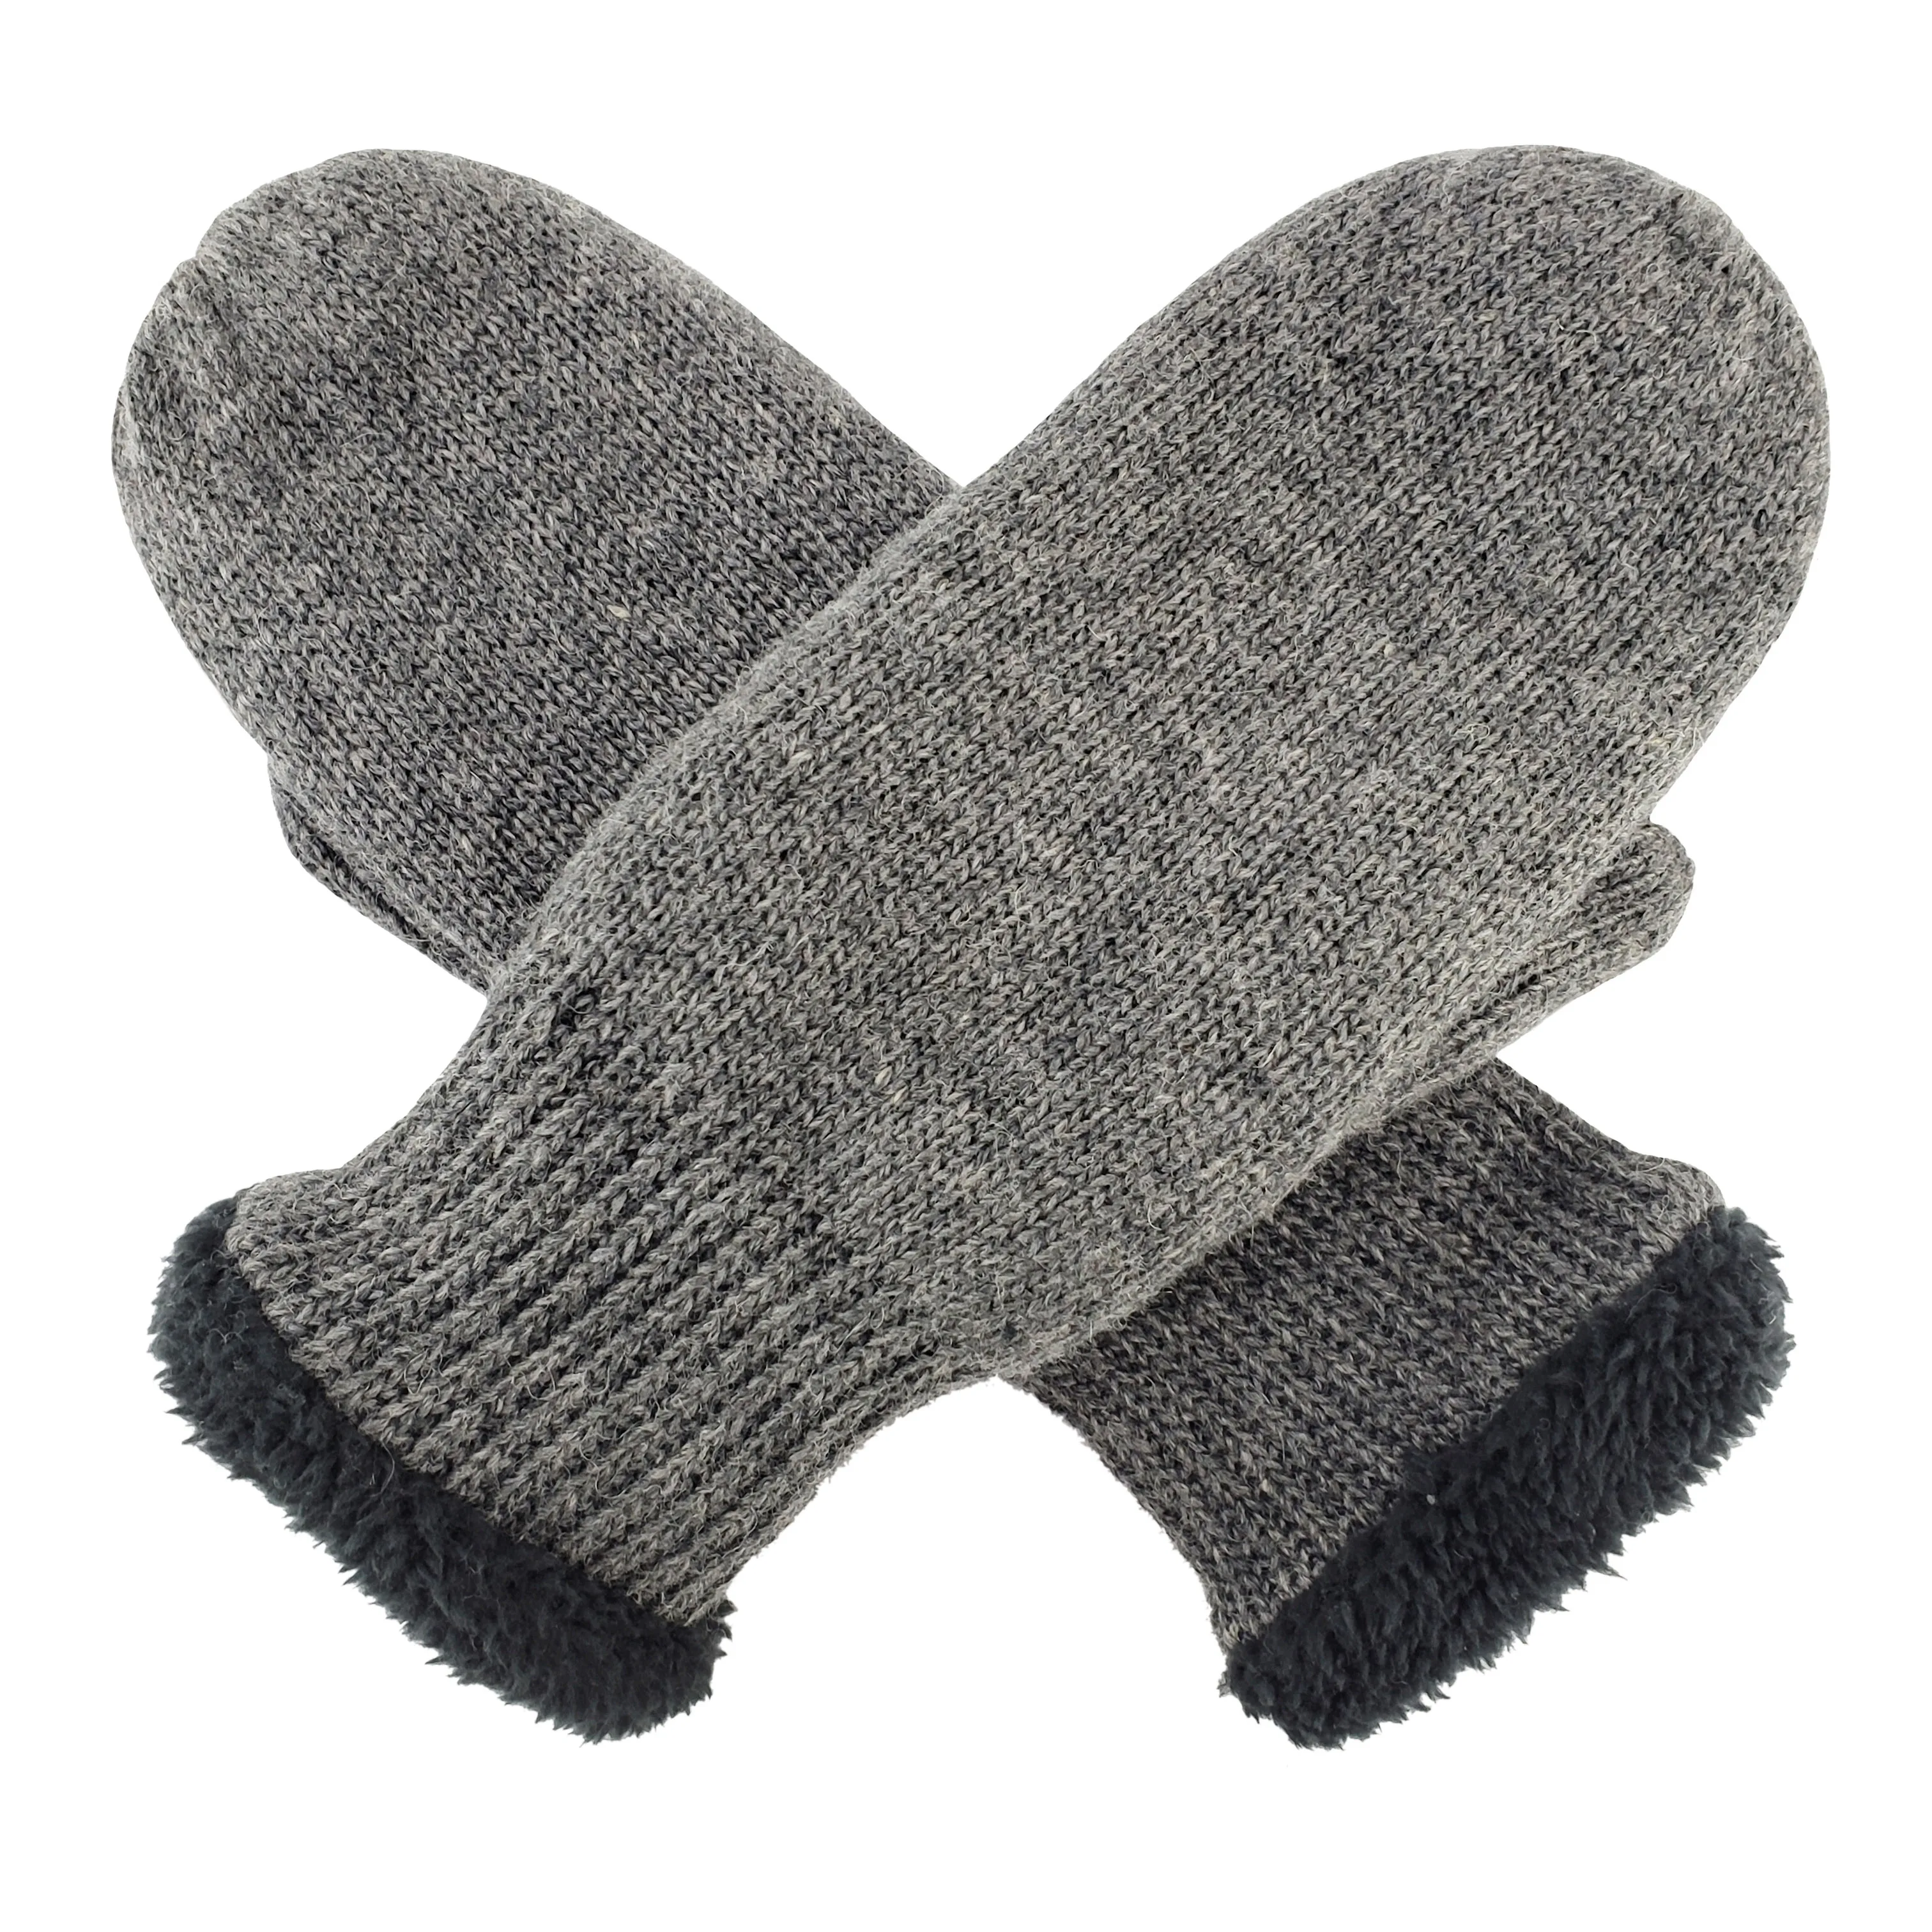 Bruceriver Womens Wool Blend Knit Mittens with Ultra Warm Soft Microfiber Lining